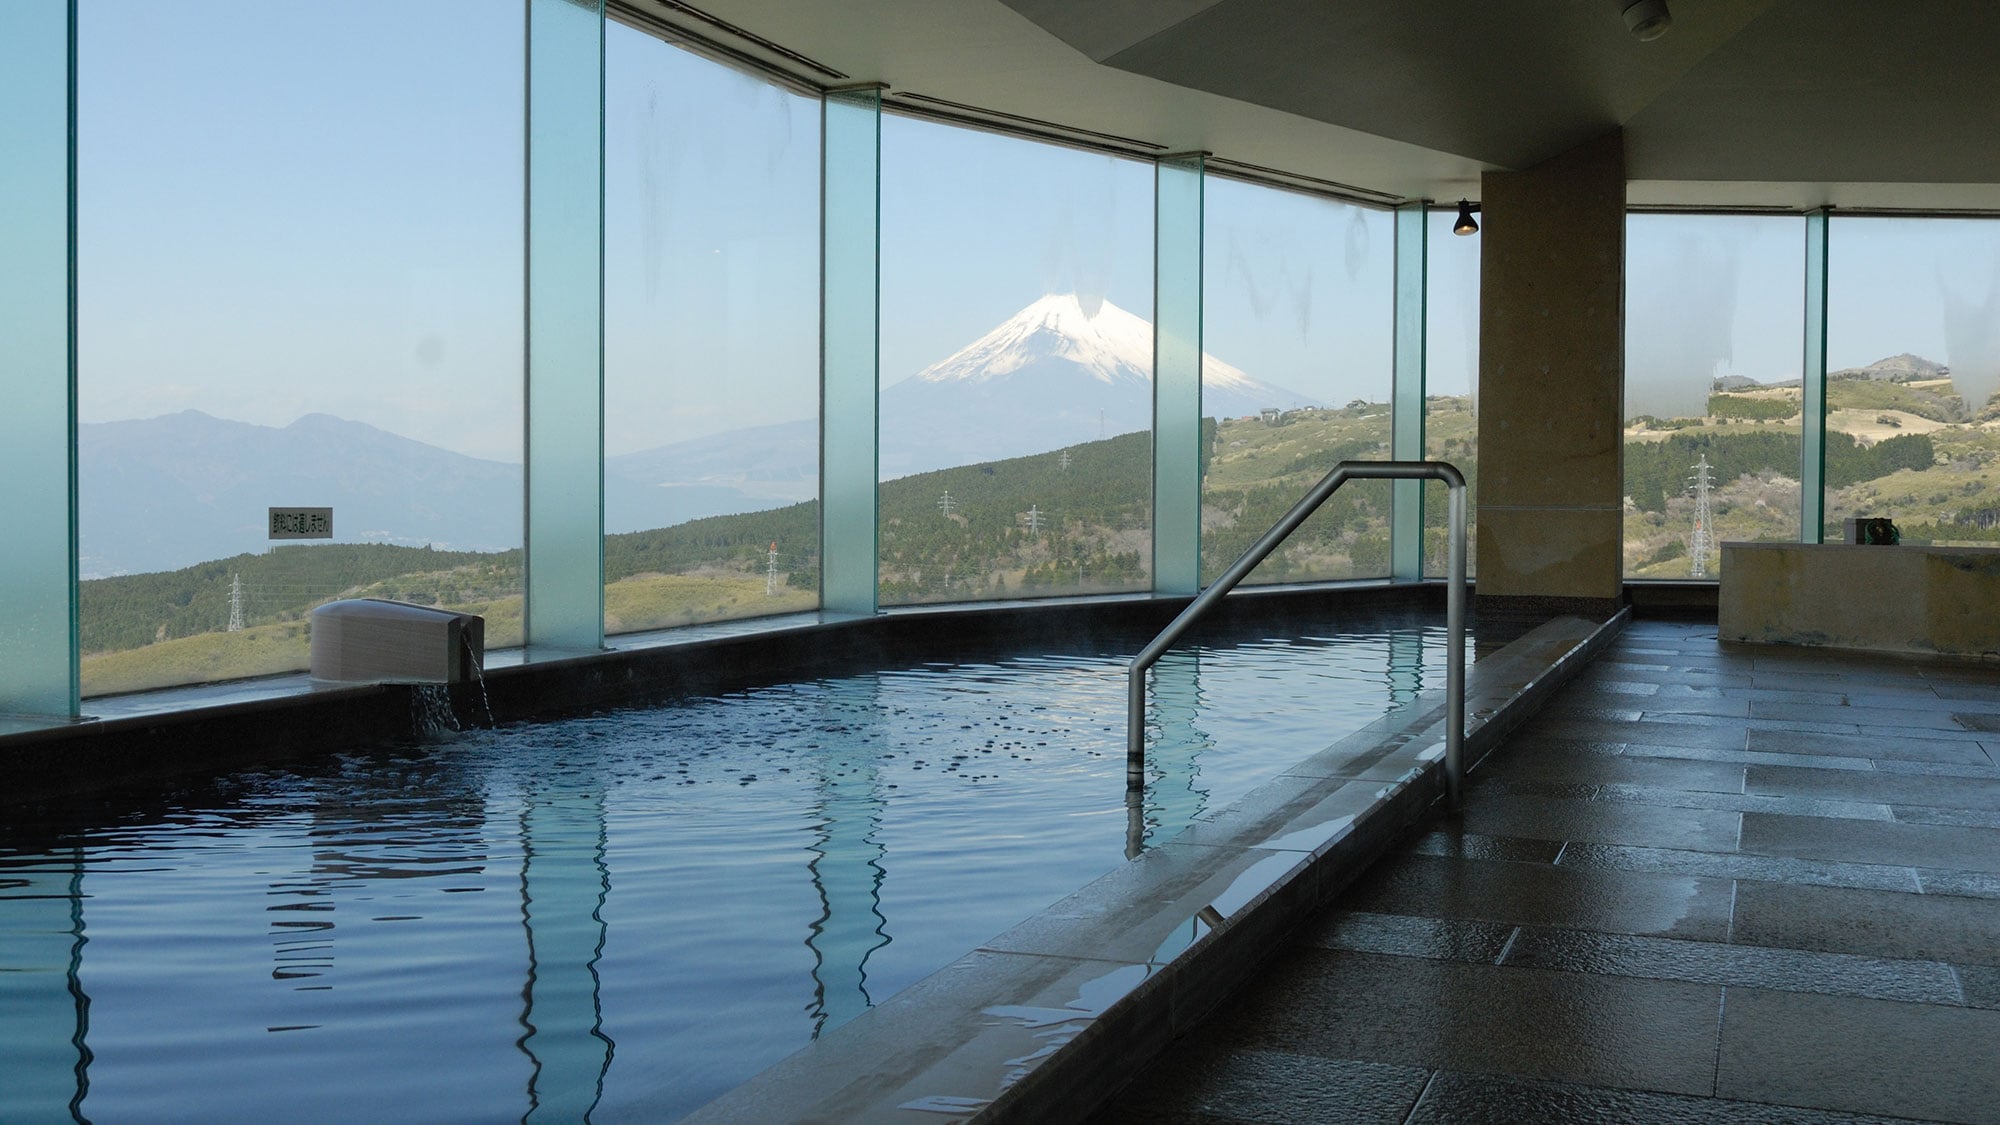 ■ Large communal bath overlooking Mt. Fuji